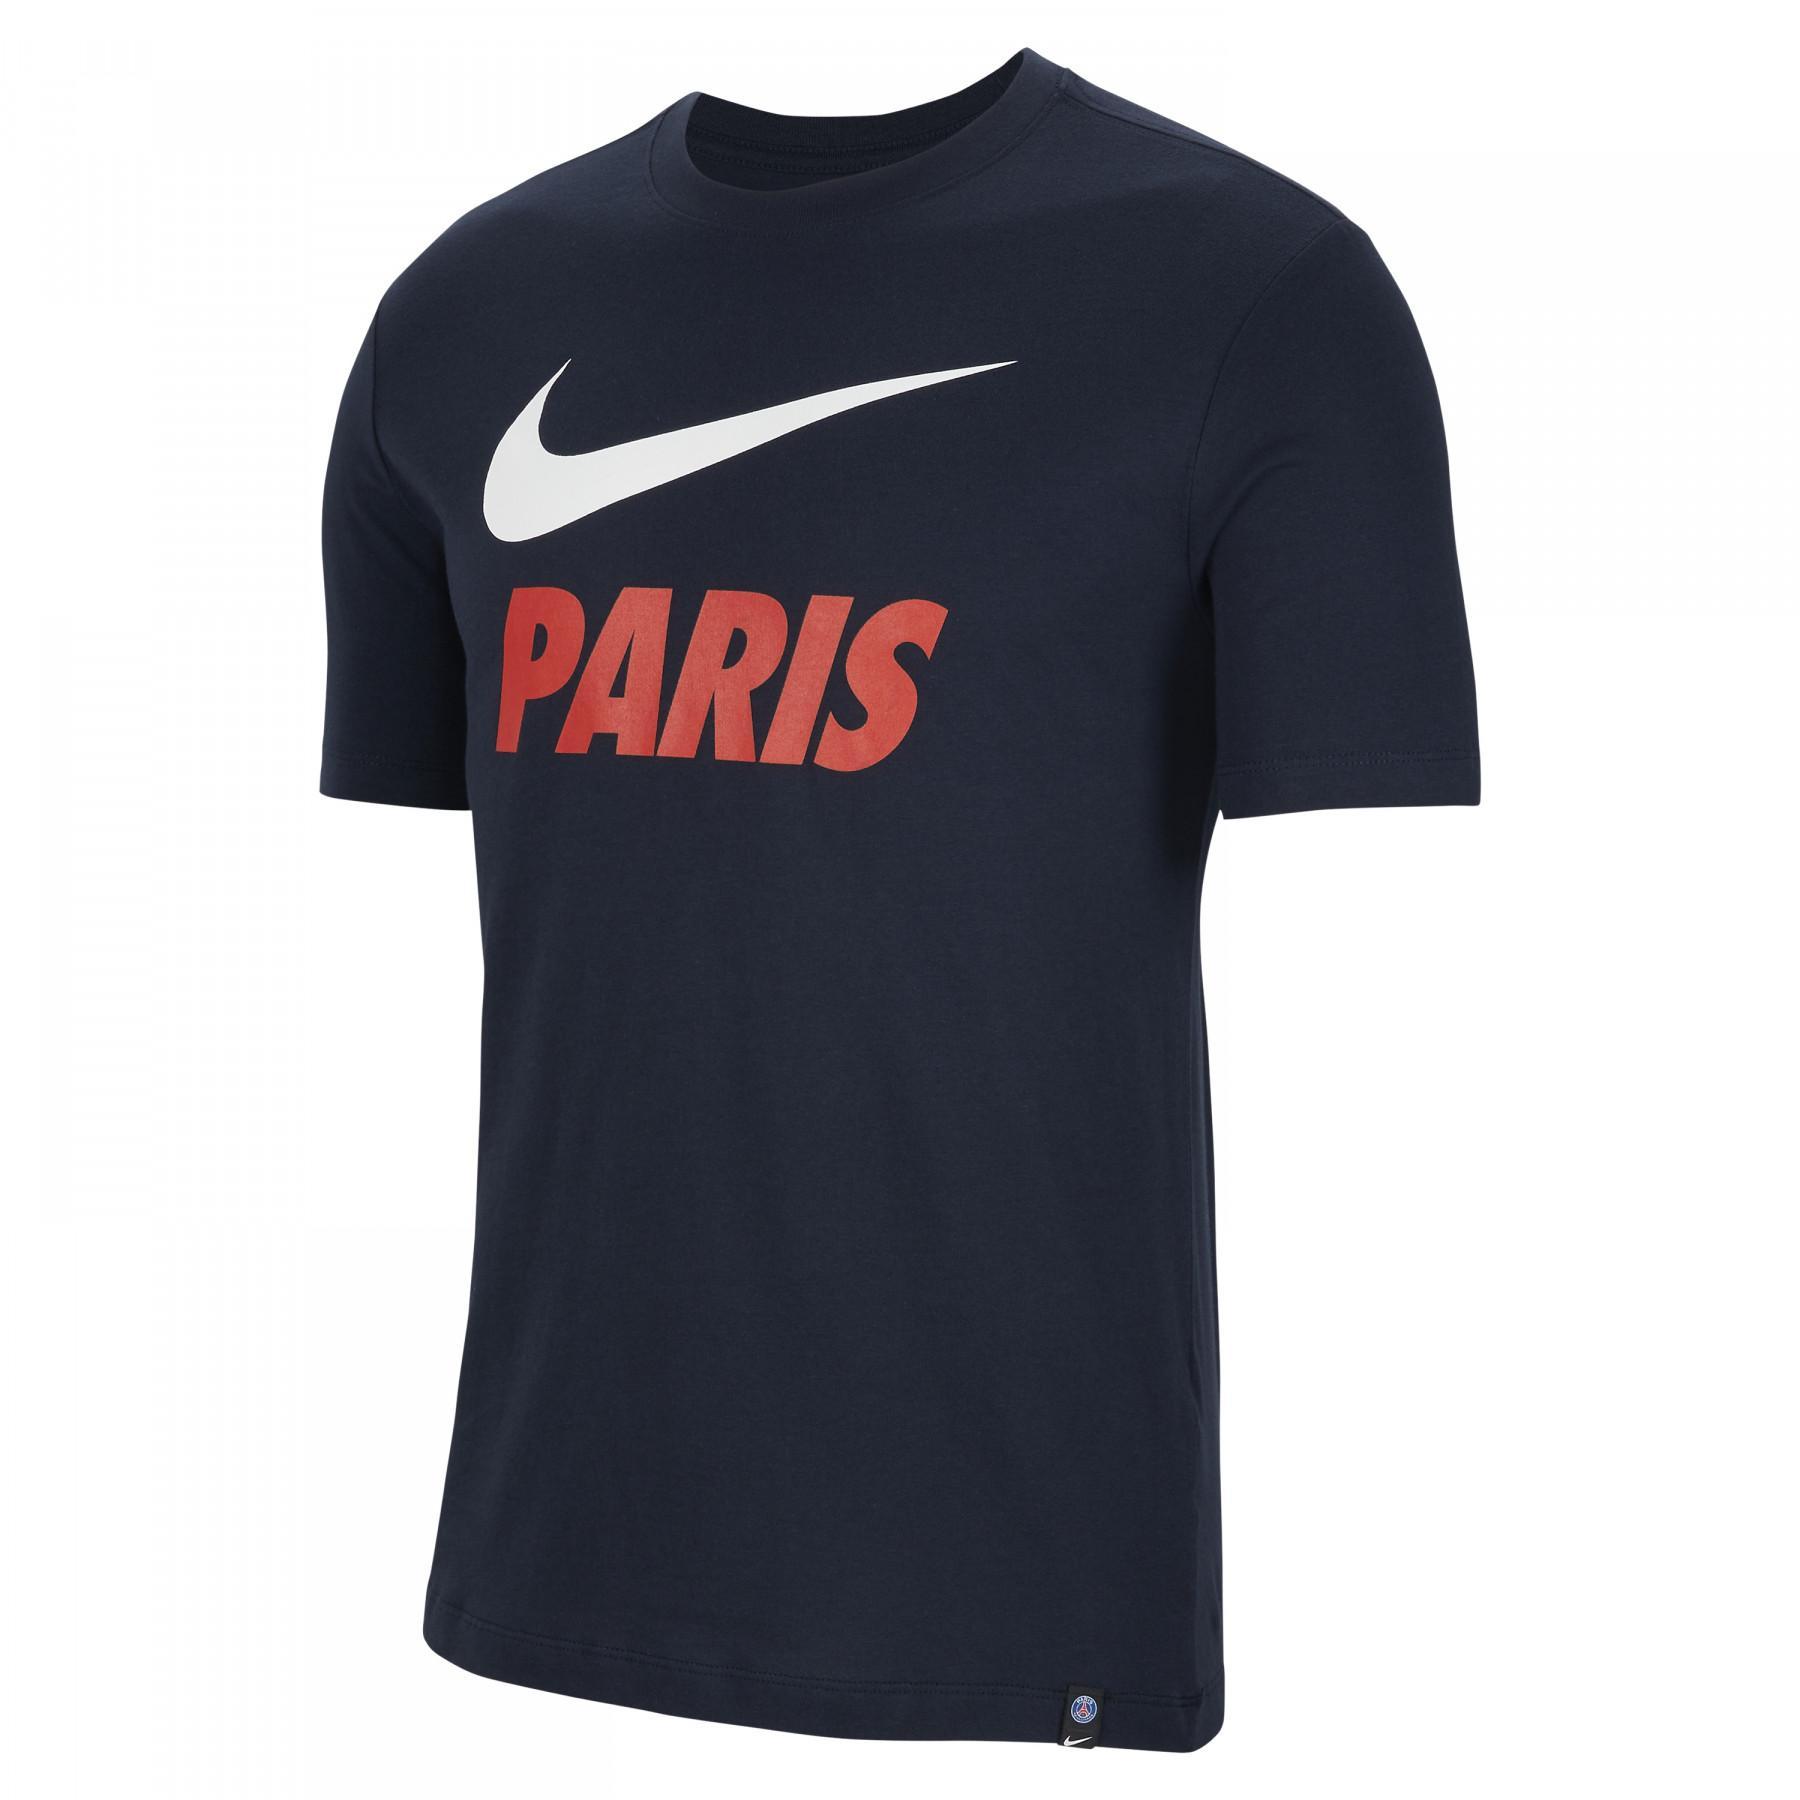 Camiseta PSG coton 2020/21